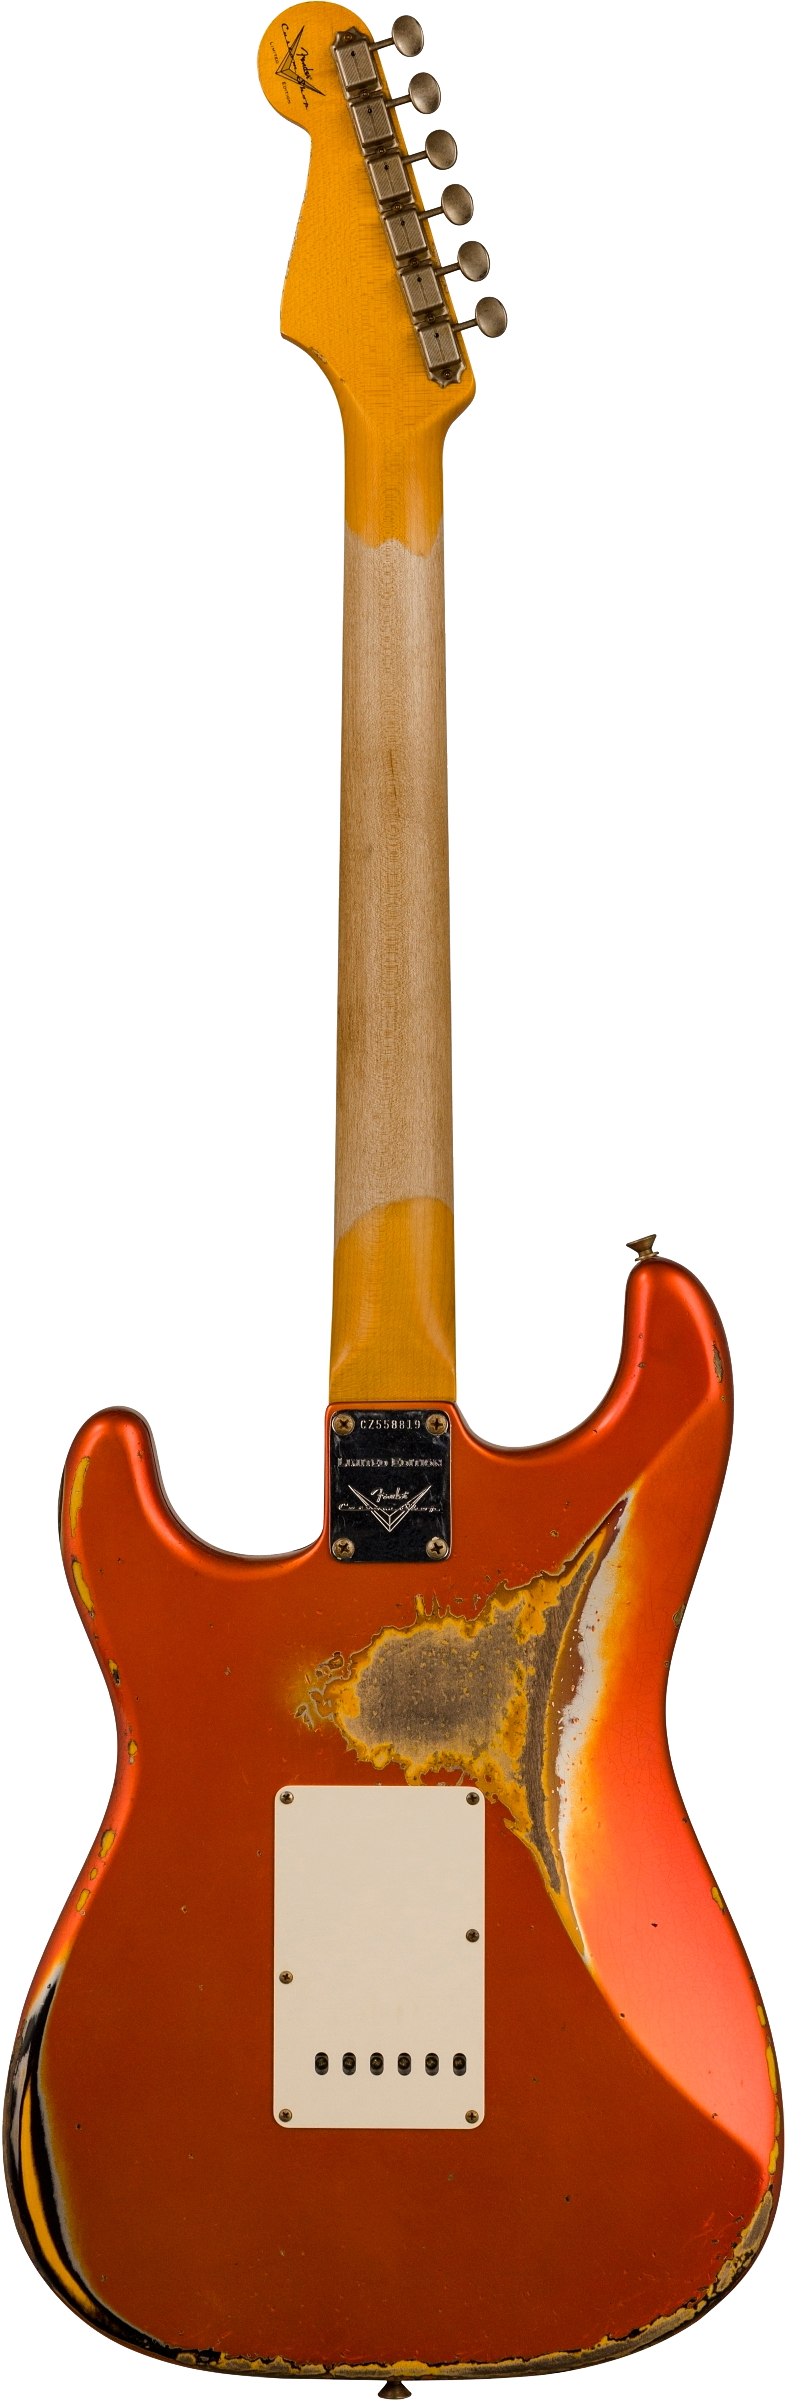 Full back shot of Fender Custom Shop Limited Edition 62 Strat Heavy Relic Aged Candy Tangerine Over 3 Color Sunburst.